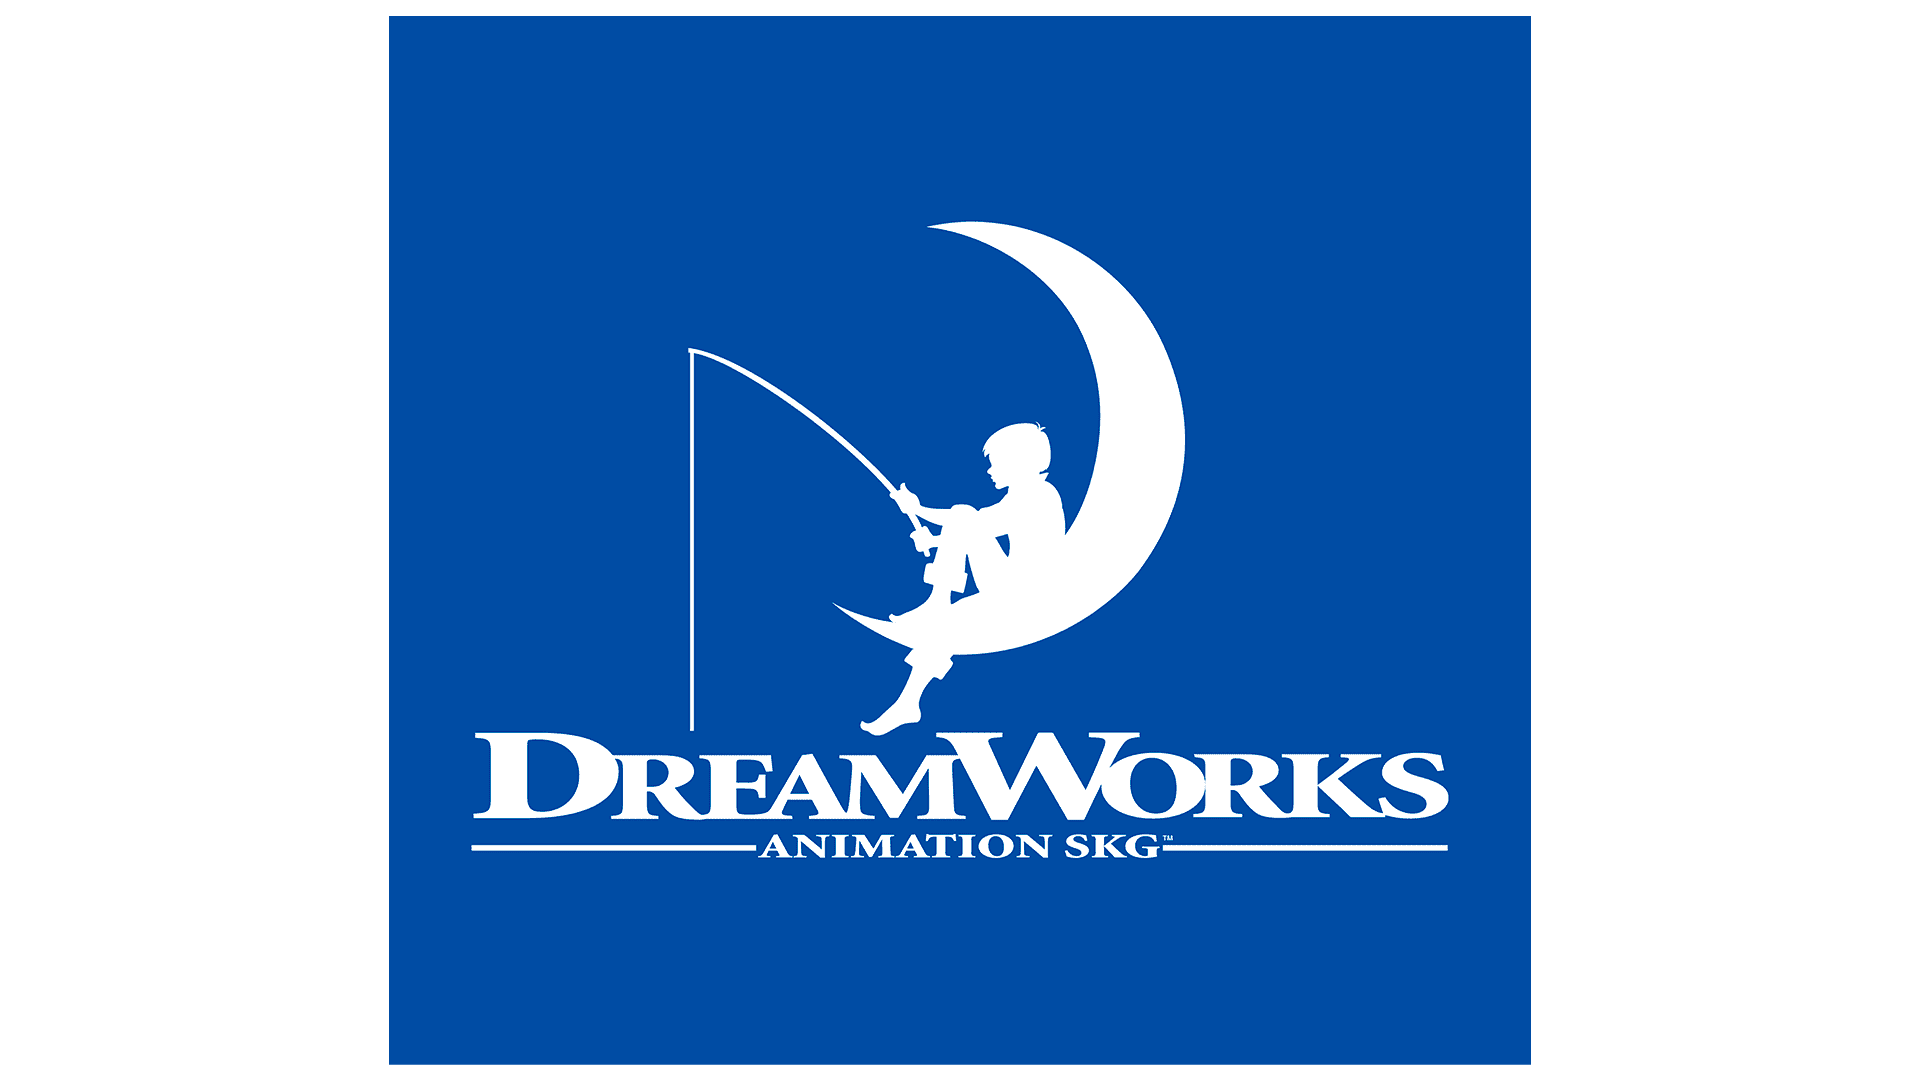 Студия Дримворкс. Компания Dreamworks. Киностудия Дримворкс. Эмблема Дримворкс. Воркс пикчерс